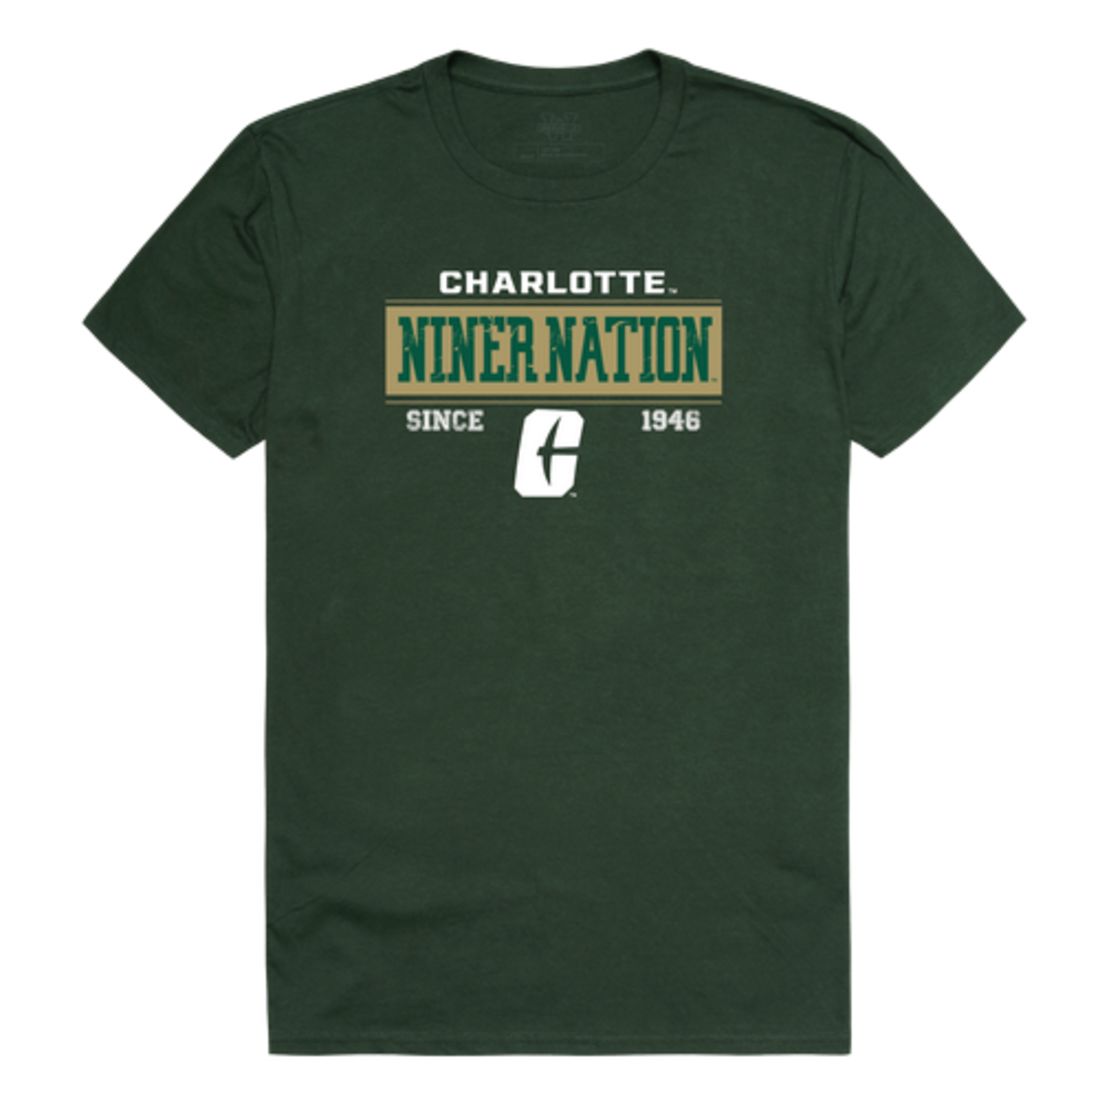 University of North Carolina at Charlotte 49ers Established T-Shirt